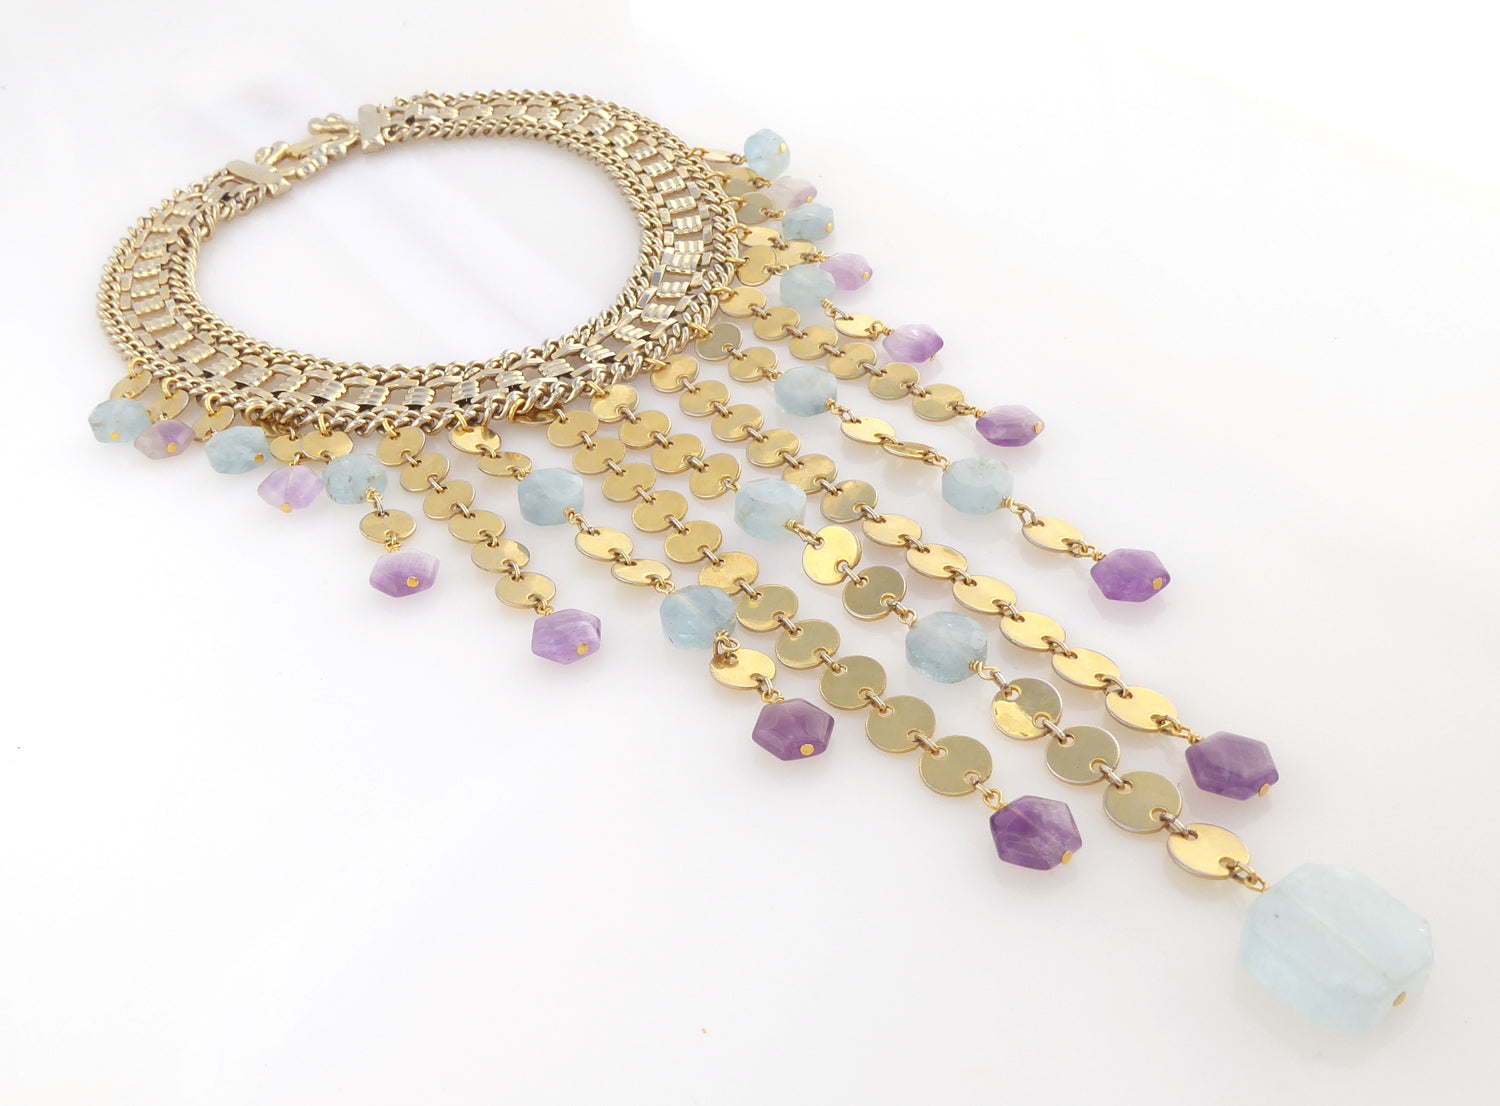 Carmeline aquamarine and amethyst necklace by Jenny Dayco 2